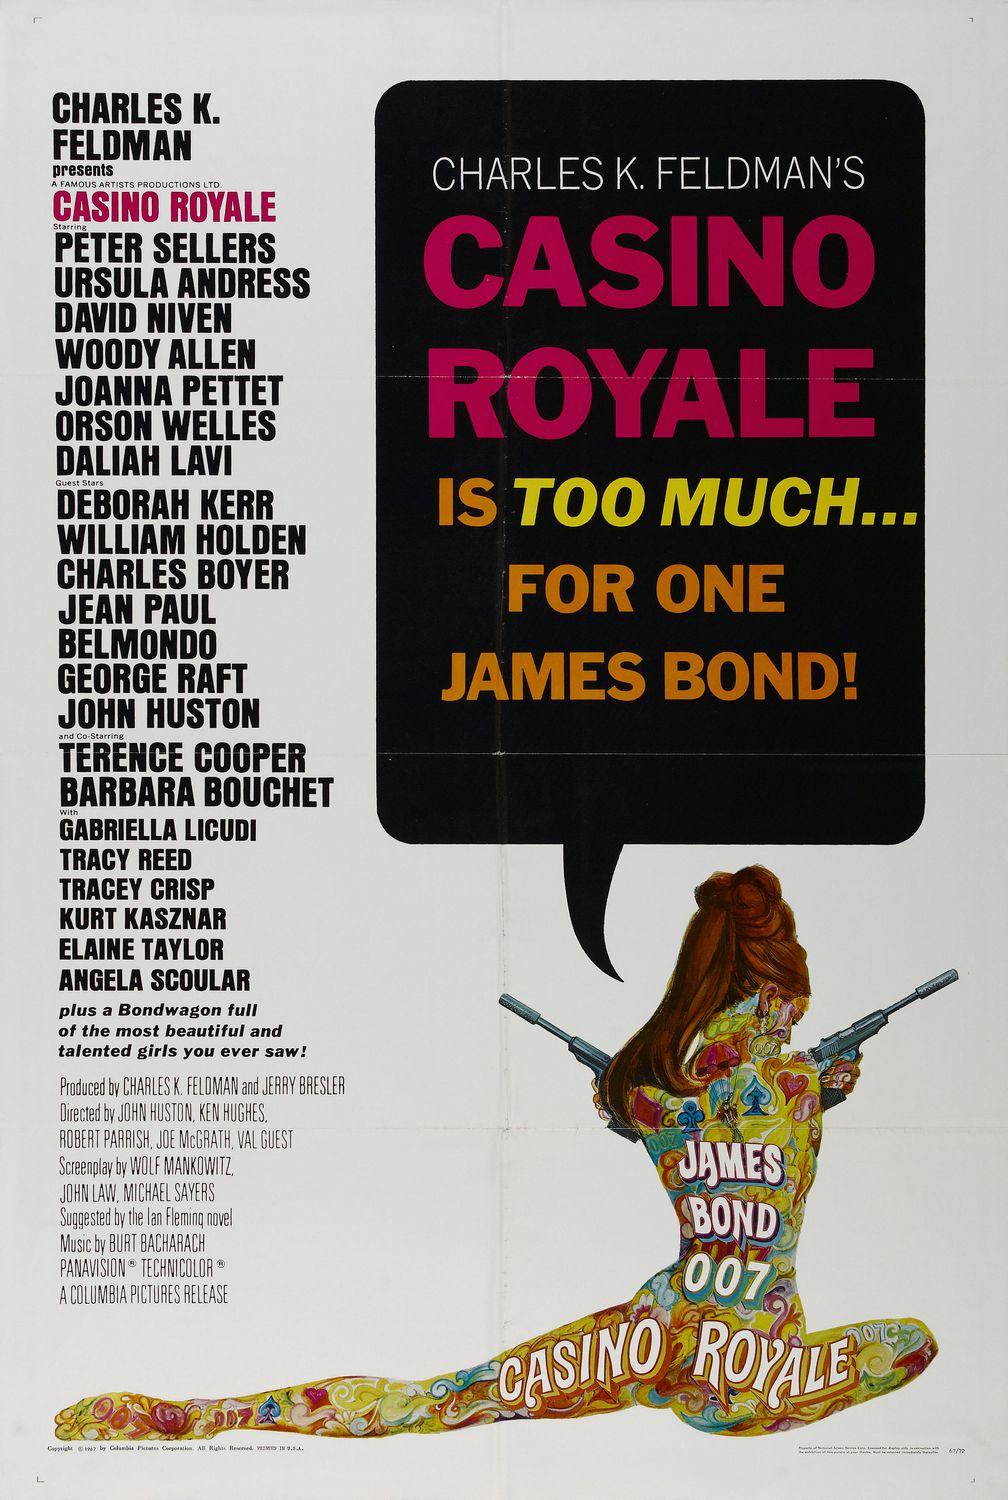 casino royale movie online free